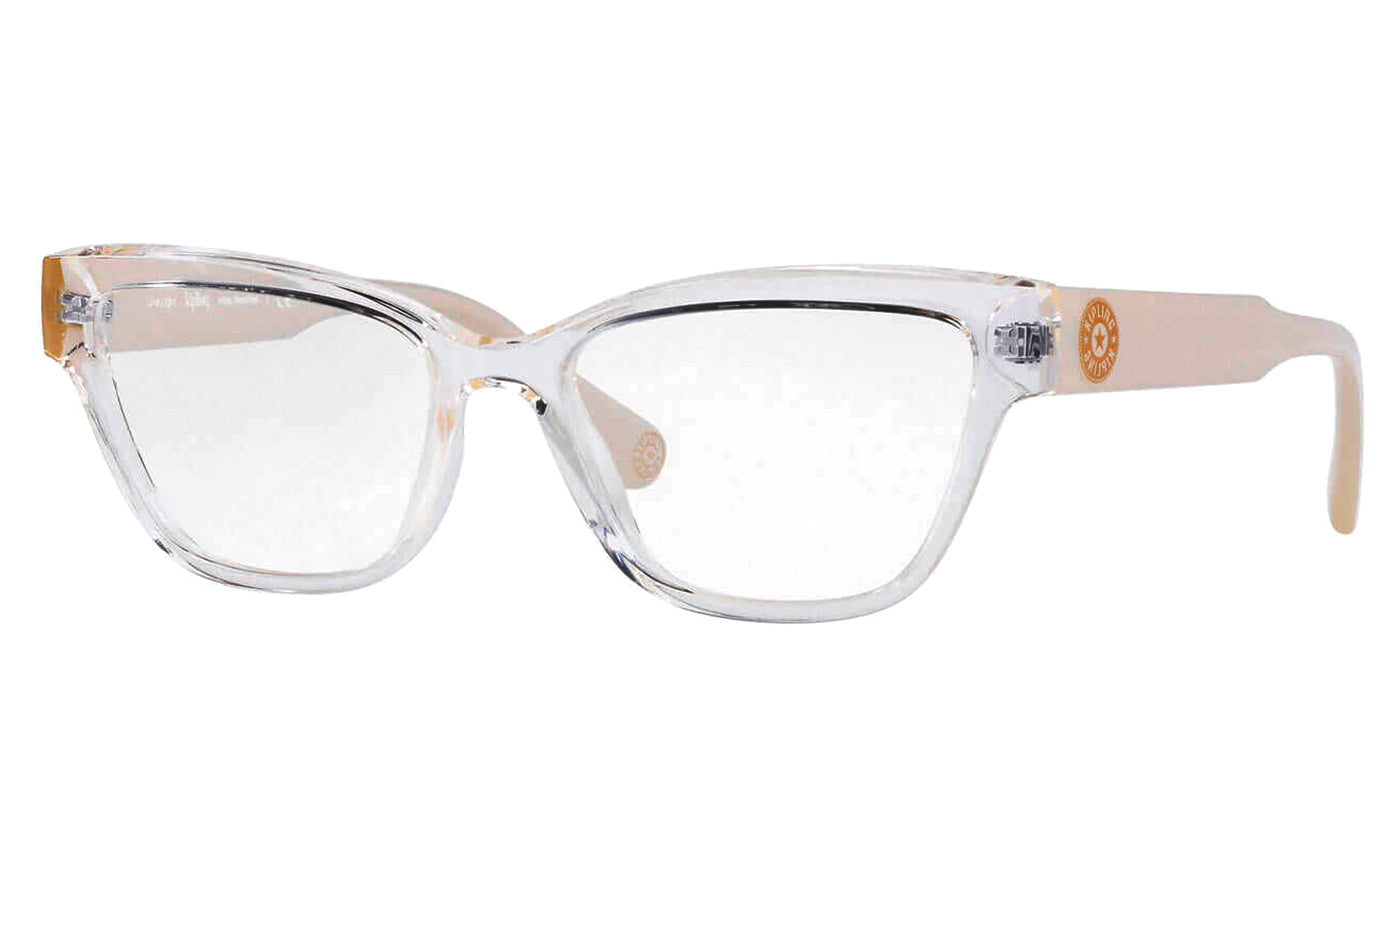 Vista-1 - Gafas oftálmicas Kipling 0KP3160 Mujer Color Transparente